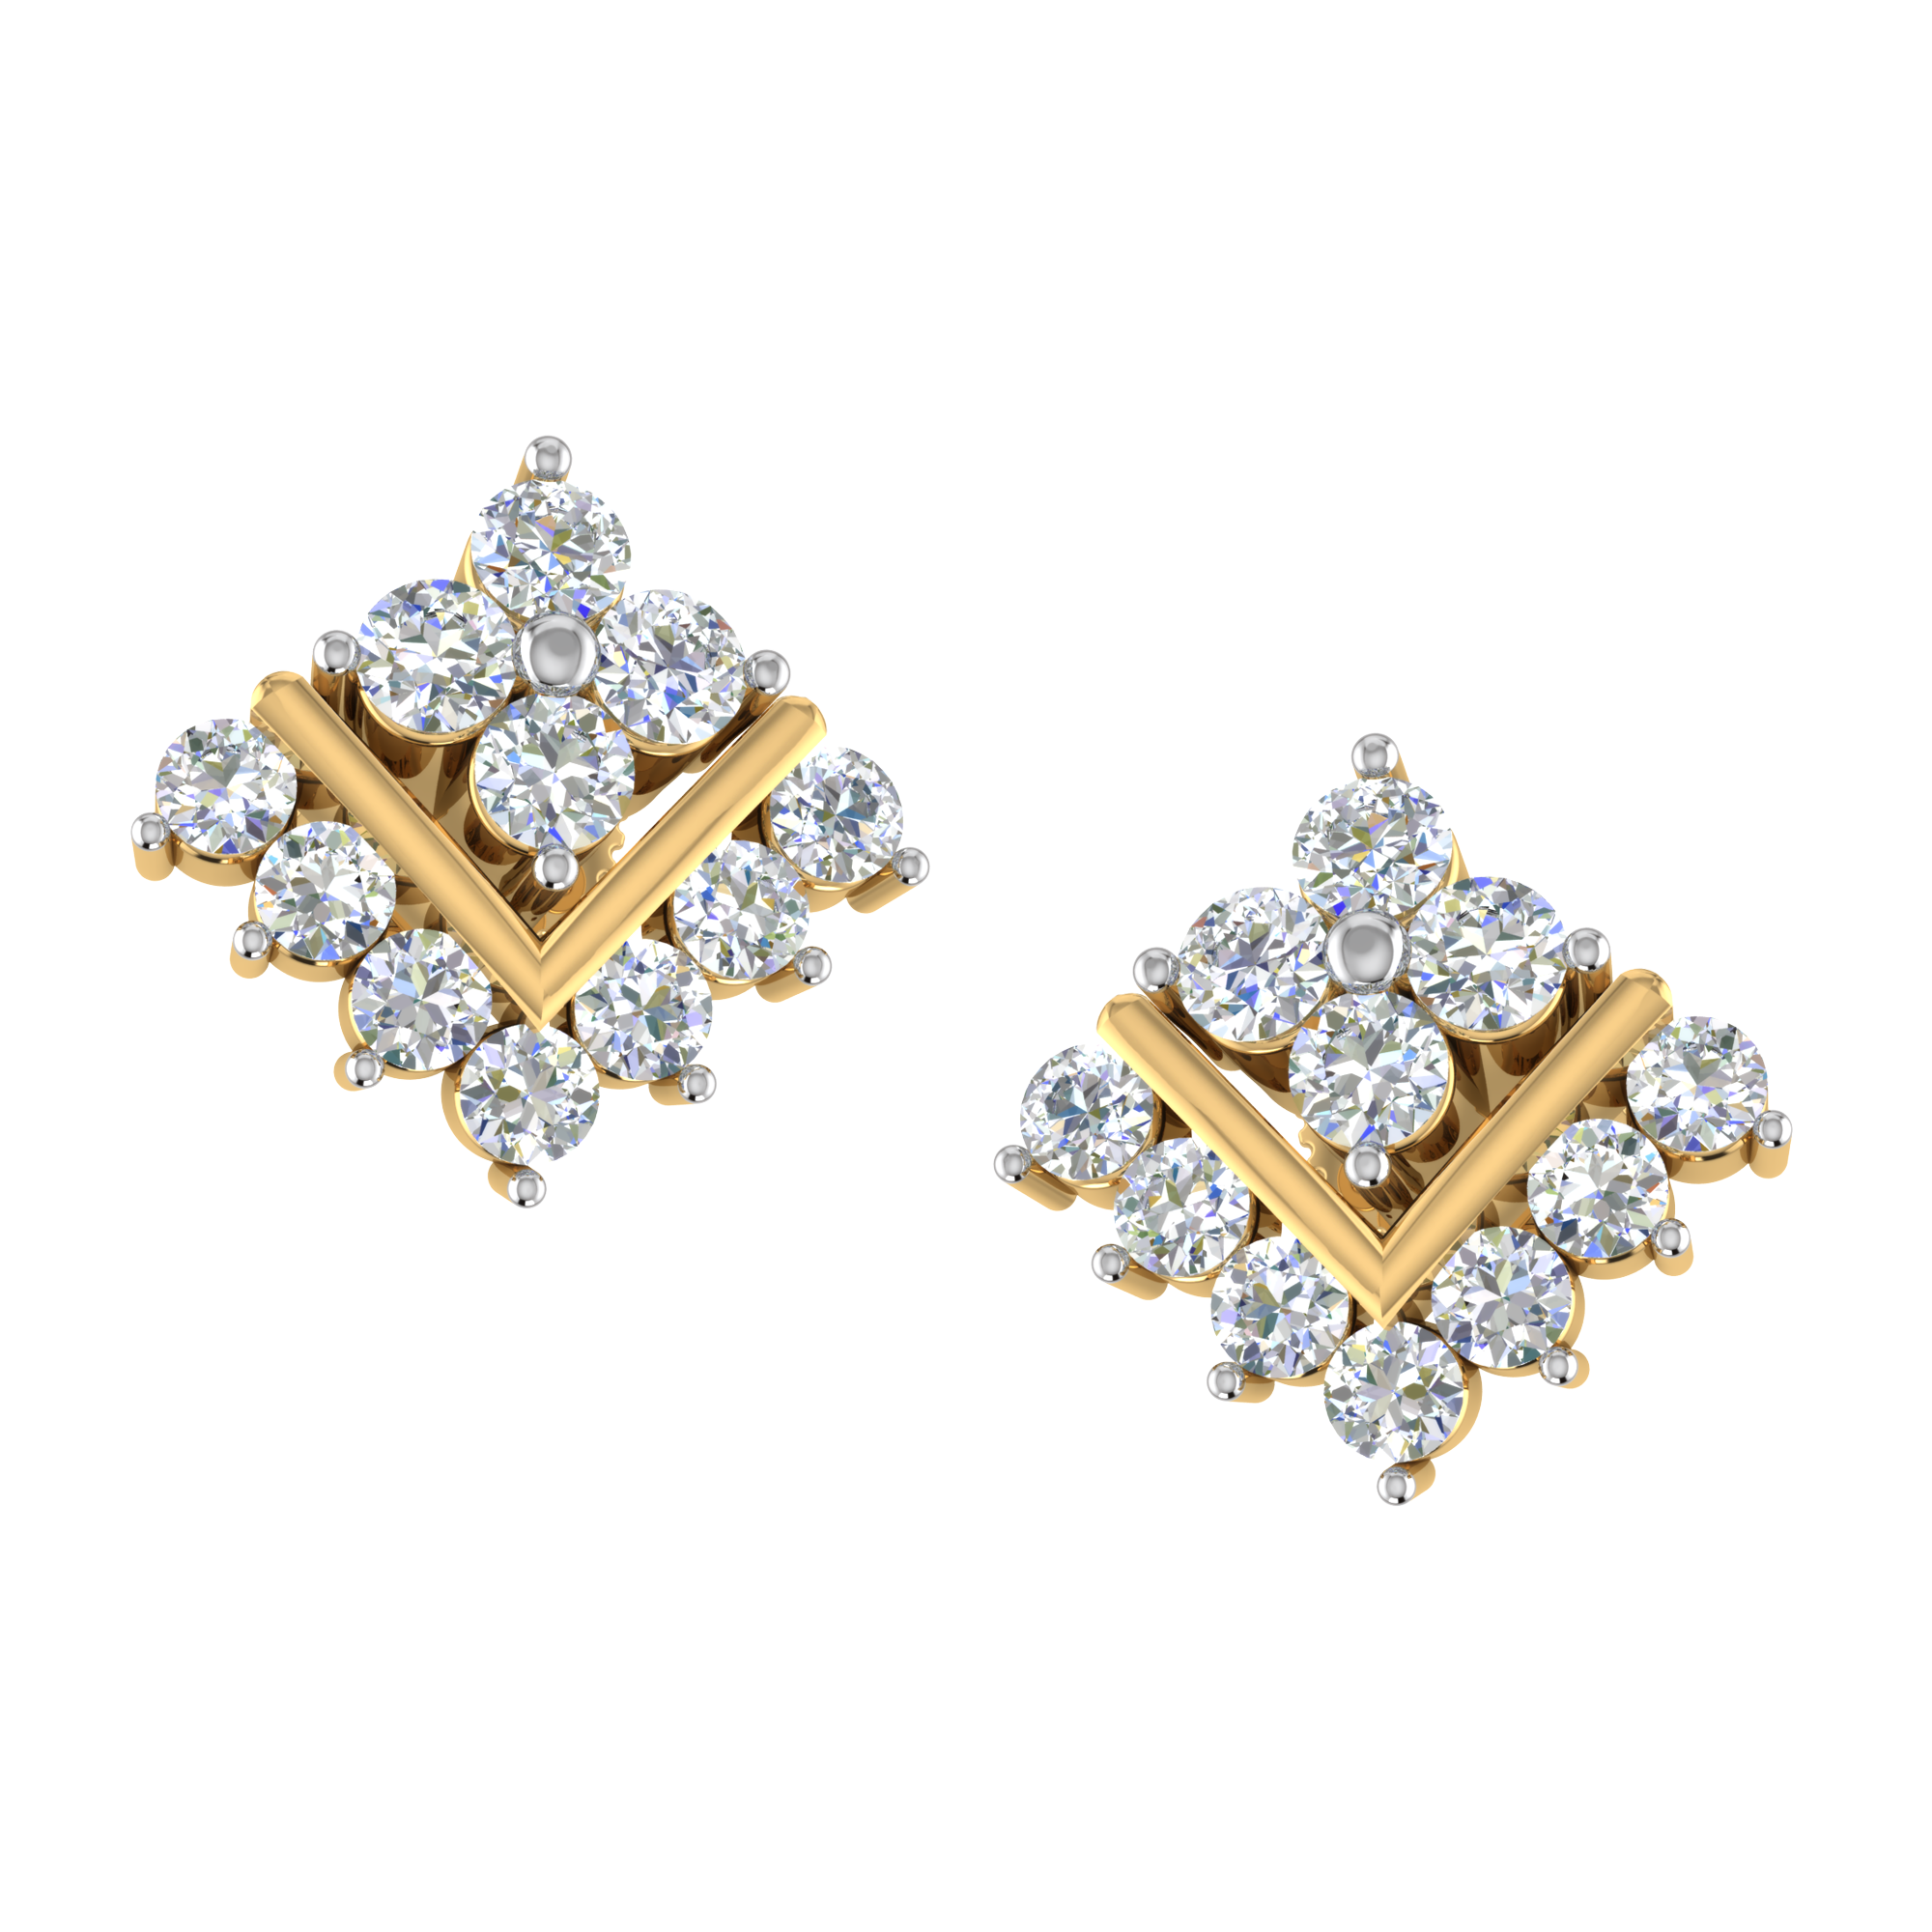 Aggregate 79+ diamond stud earrings images super hot - esthdonghoadian